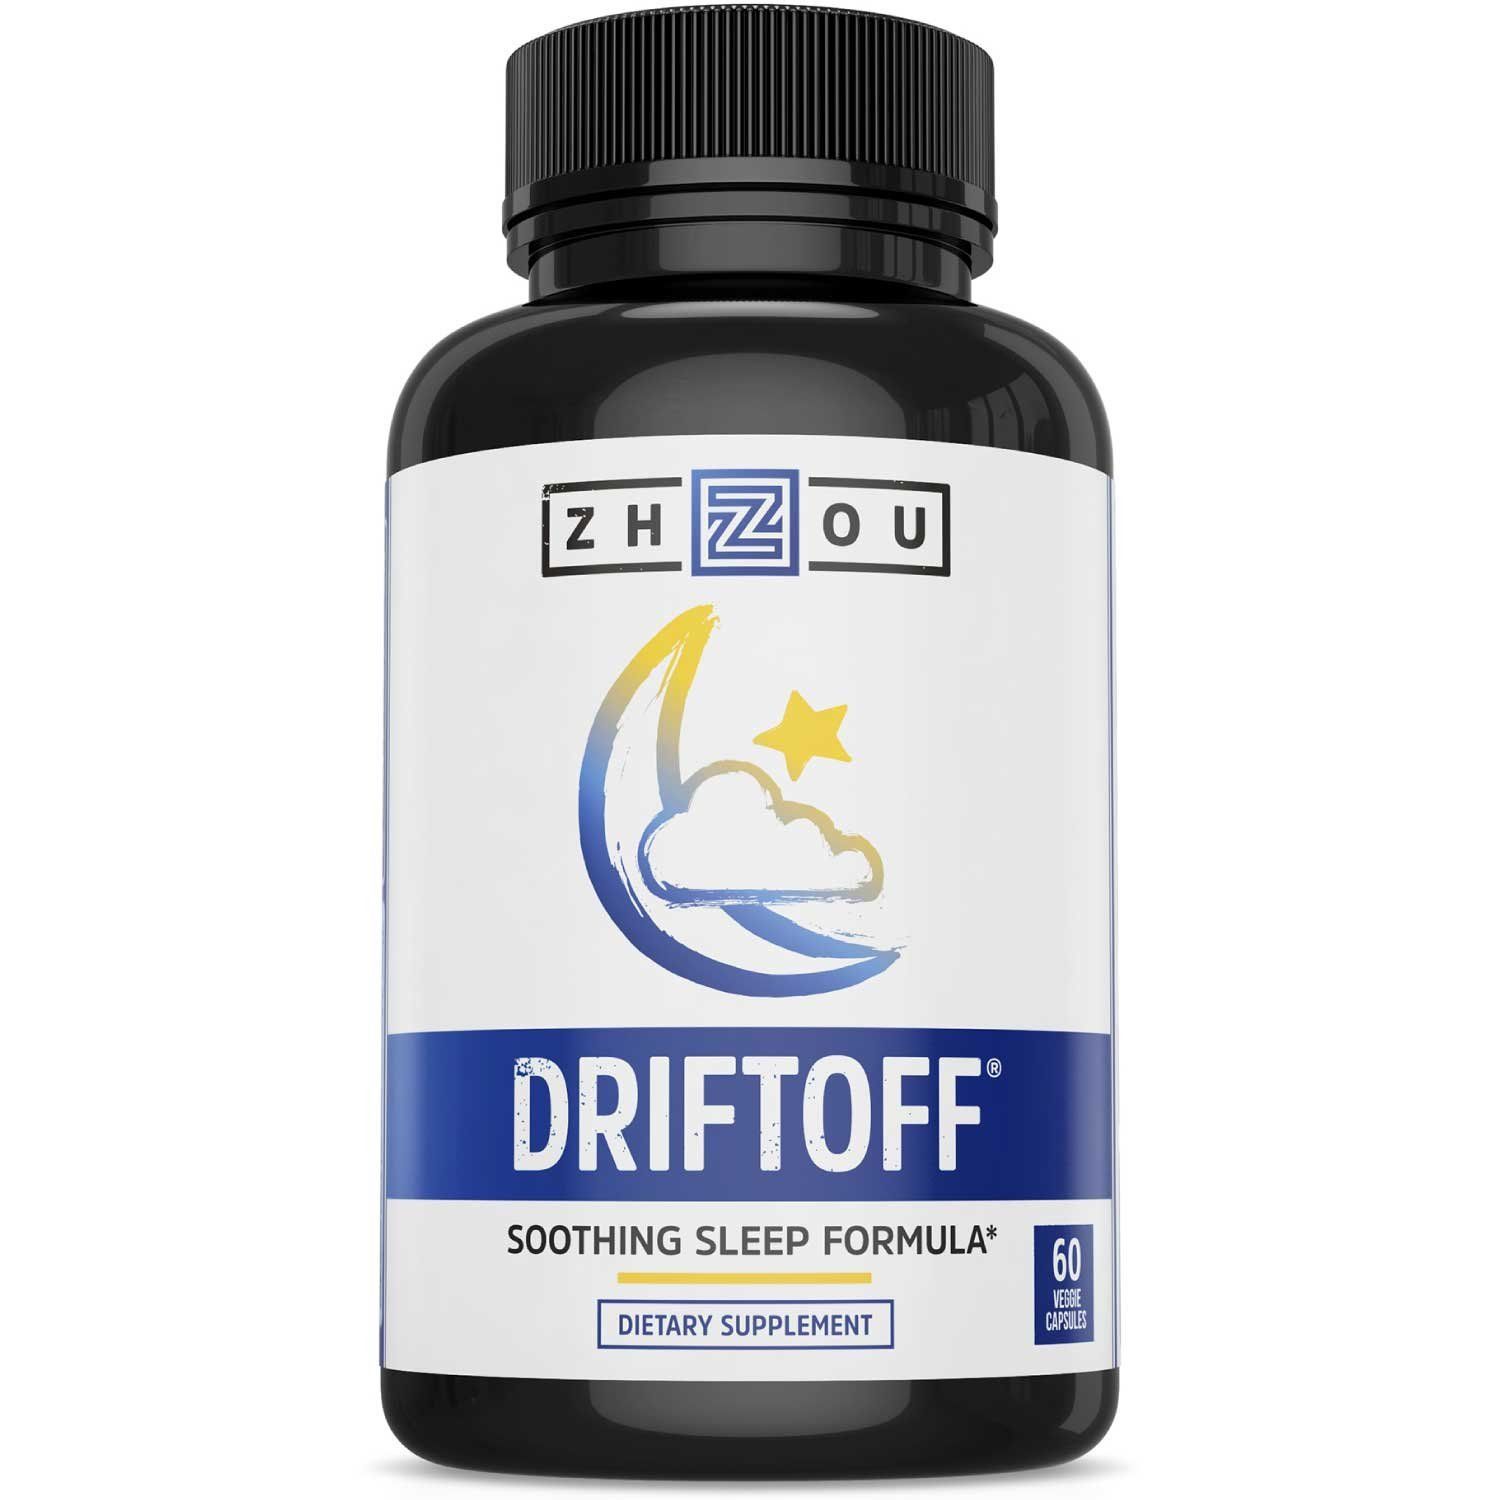 DRIFTOFF Premium Sleep Aid with Valerian Root 